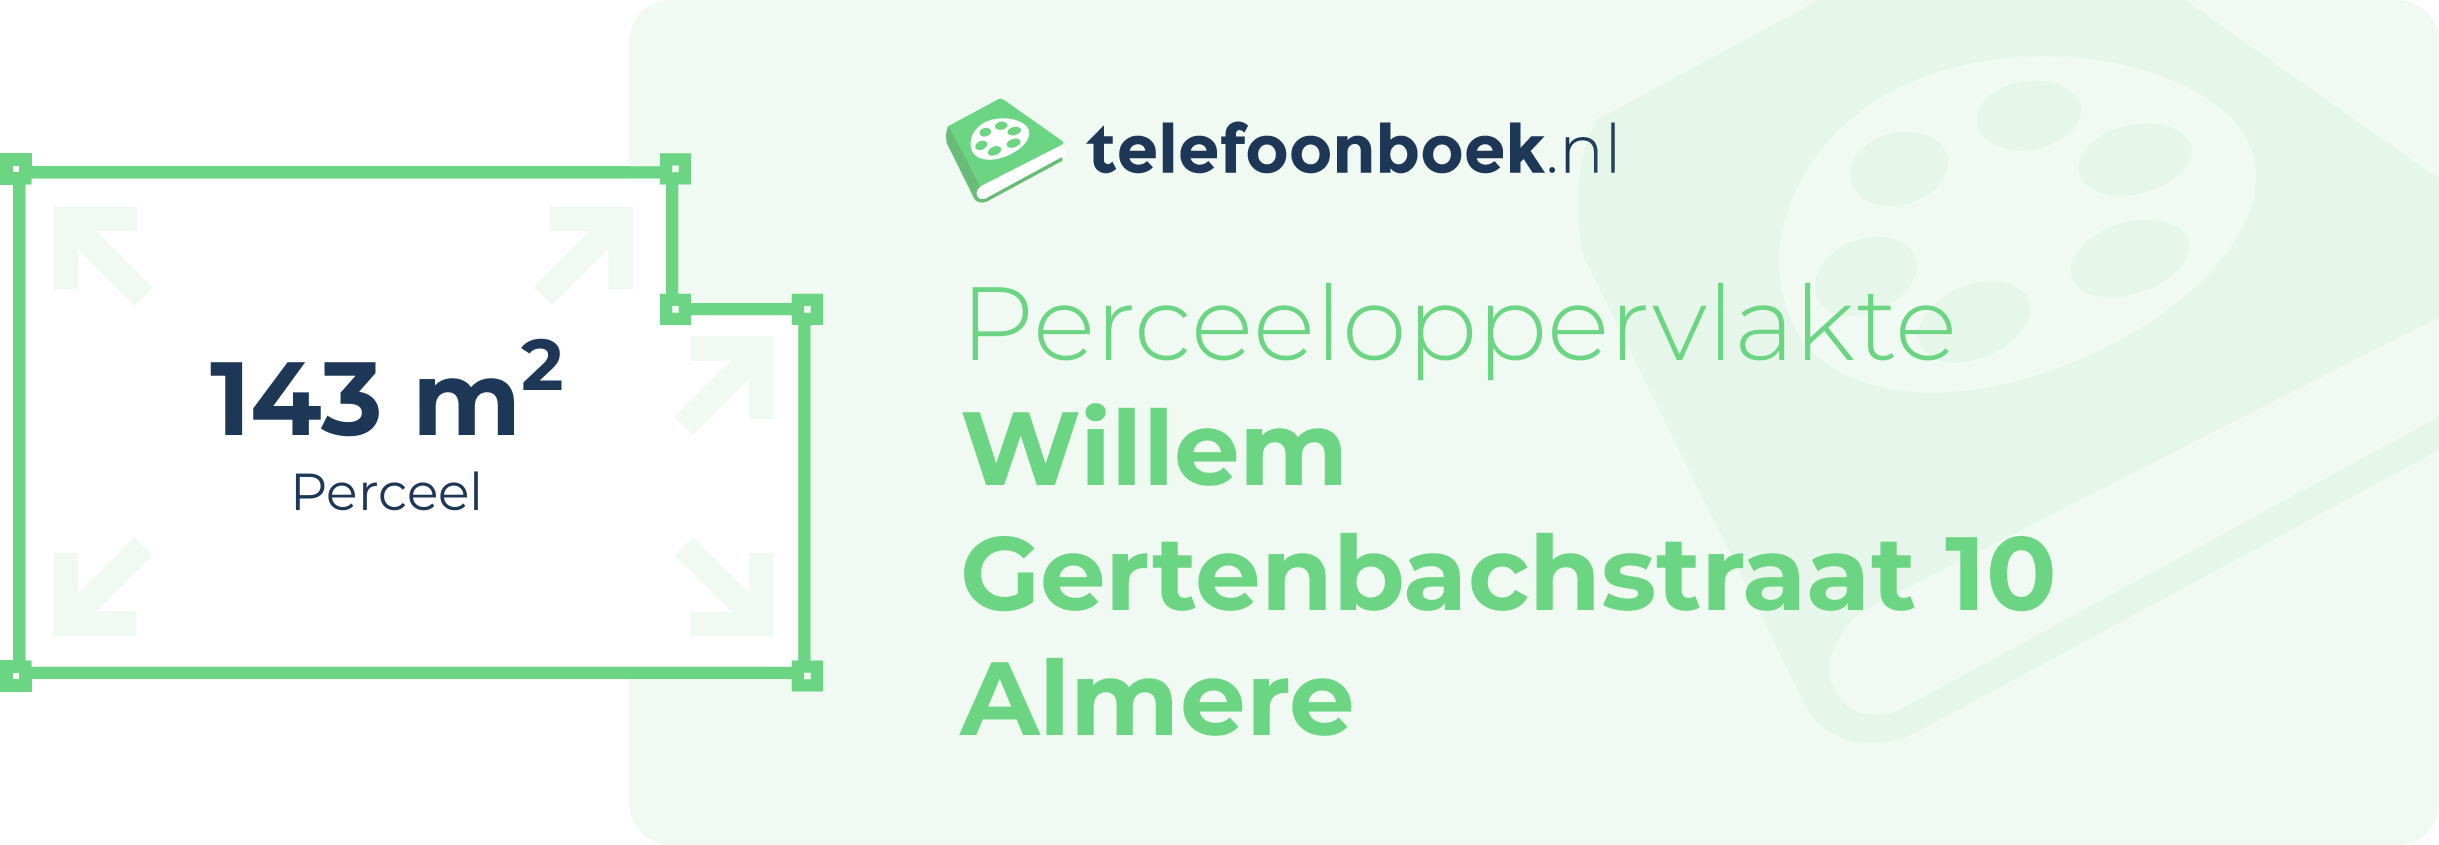 Perceeloppervlakte Willem Gertenbachstraat 10 Almere